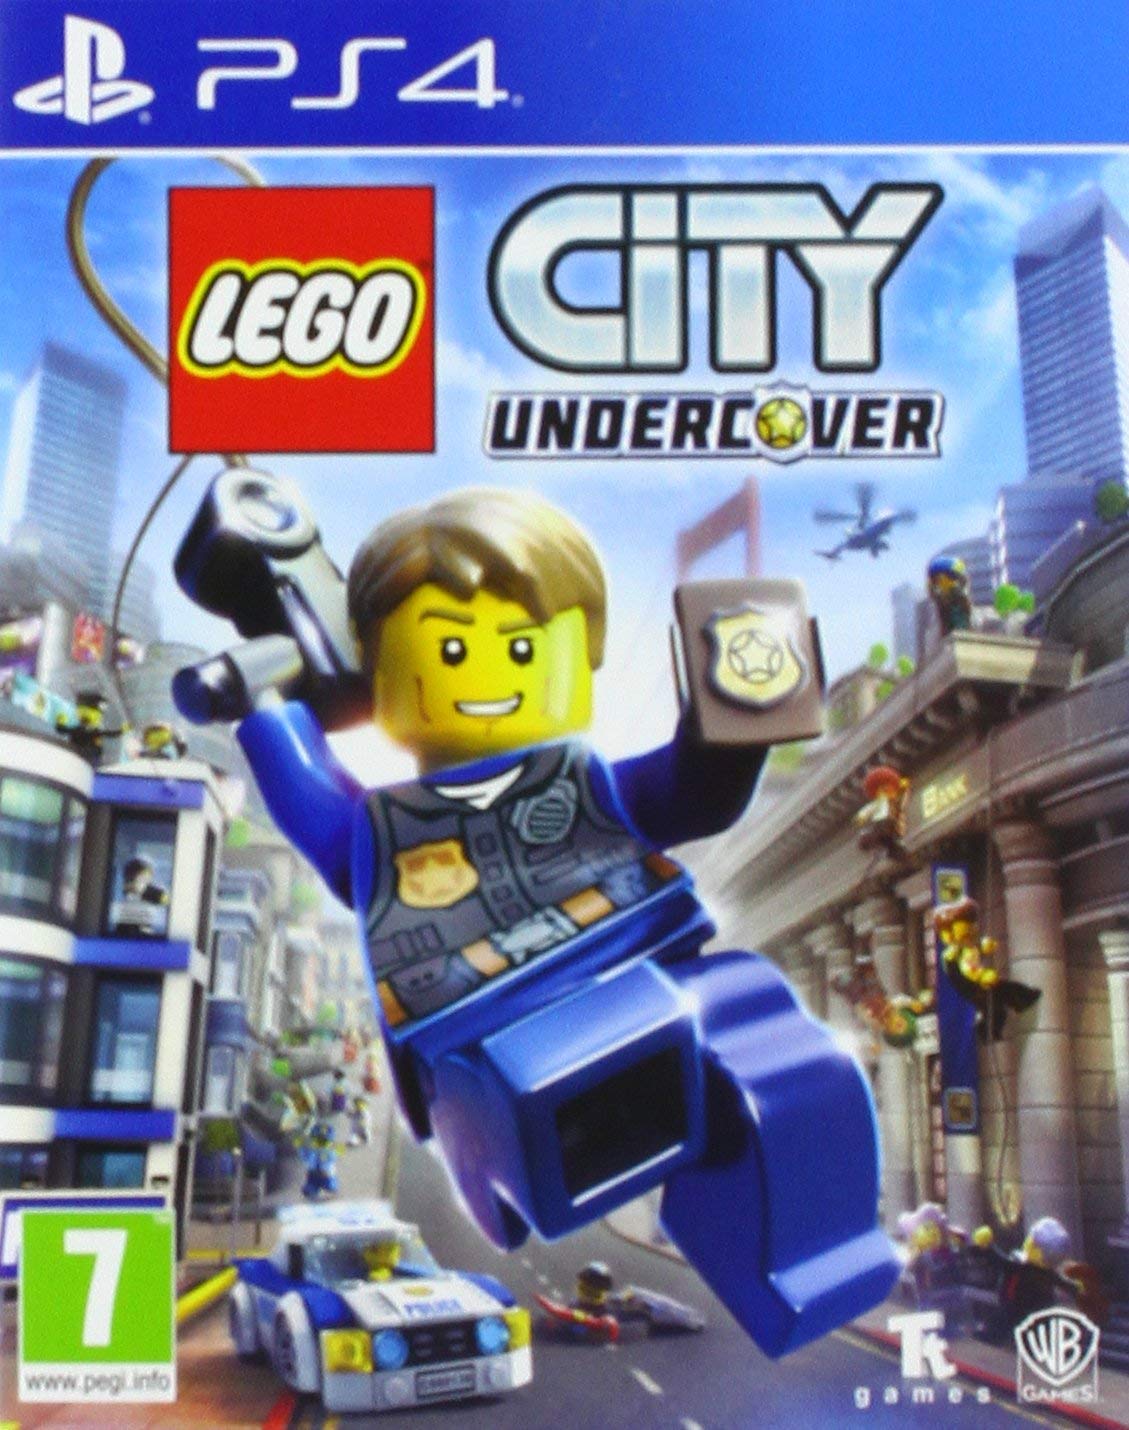 LEGO CITY UNDERCOVER PS4 UK